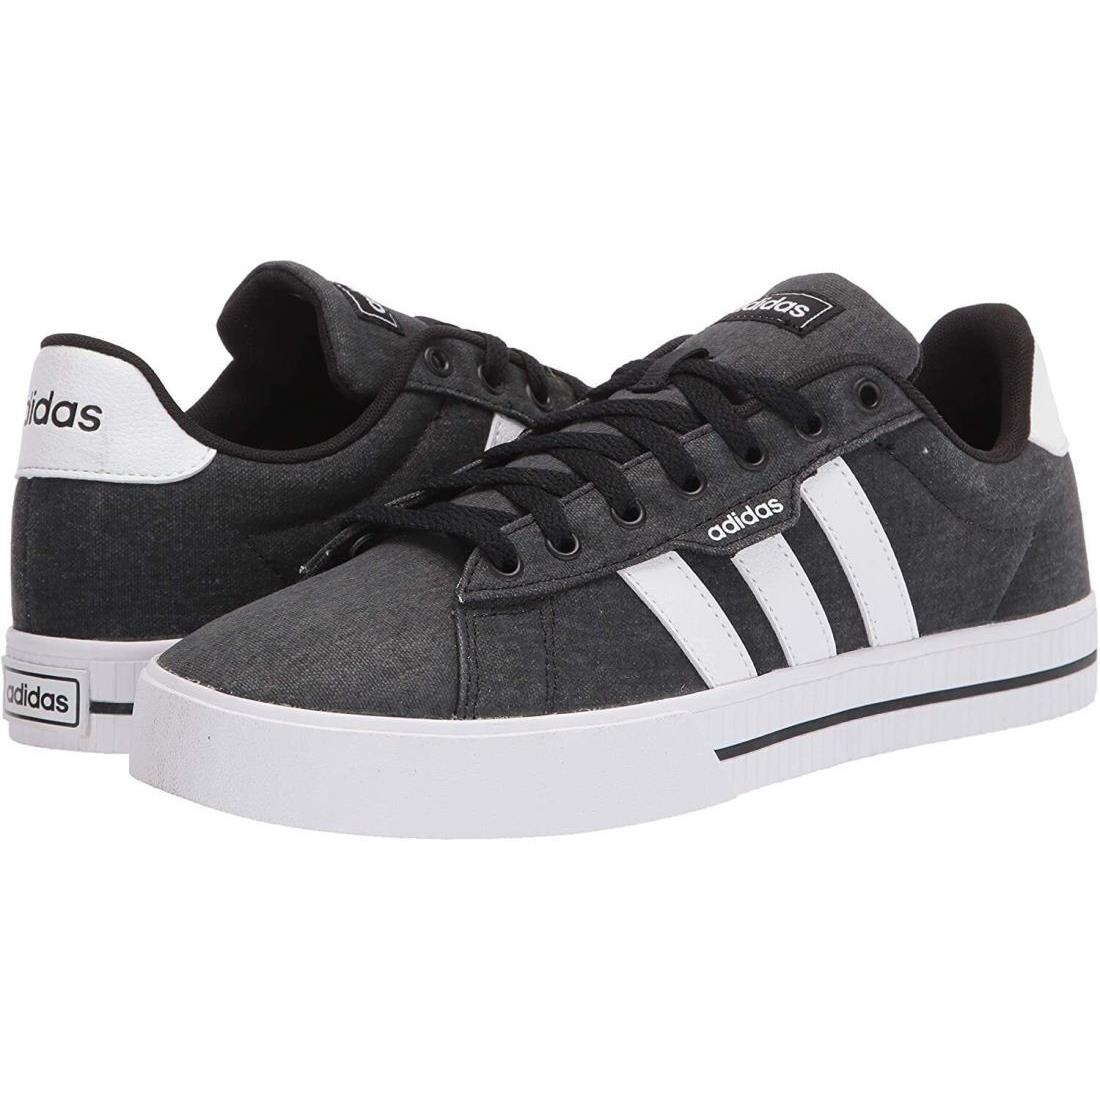 Man Adidas Daily 3.0 Skate Shoe FW7033 Black/white/black